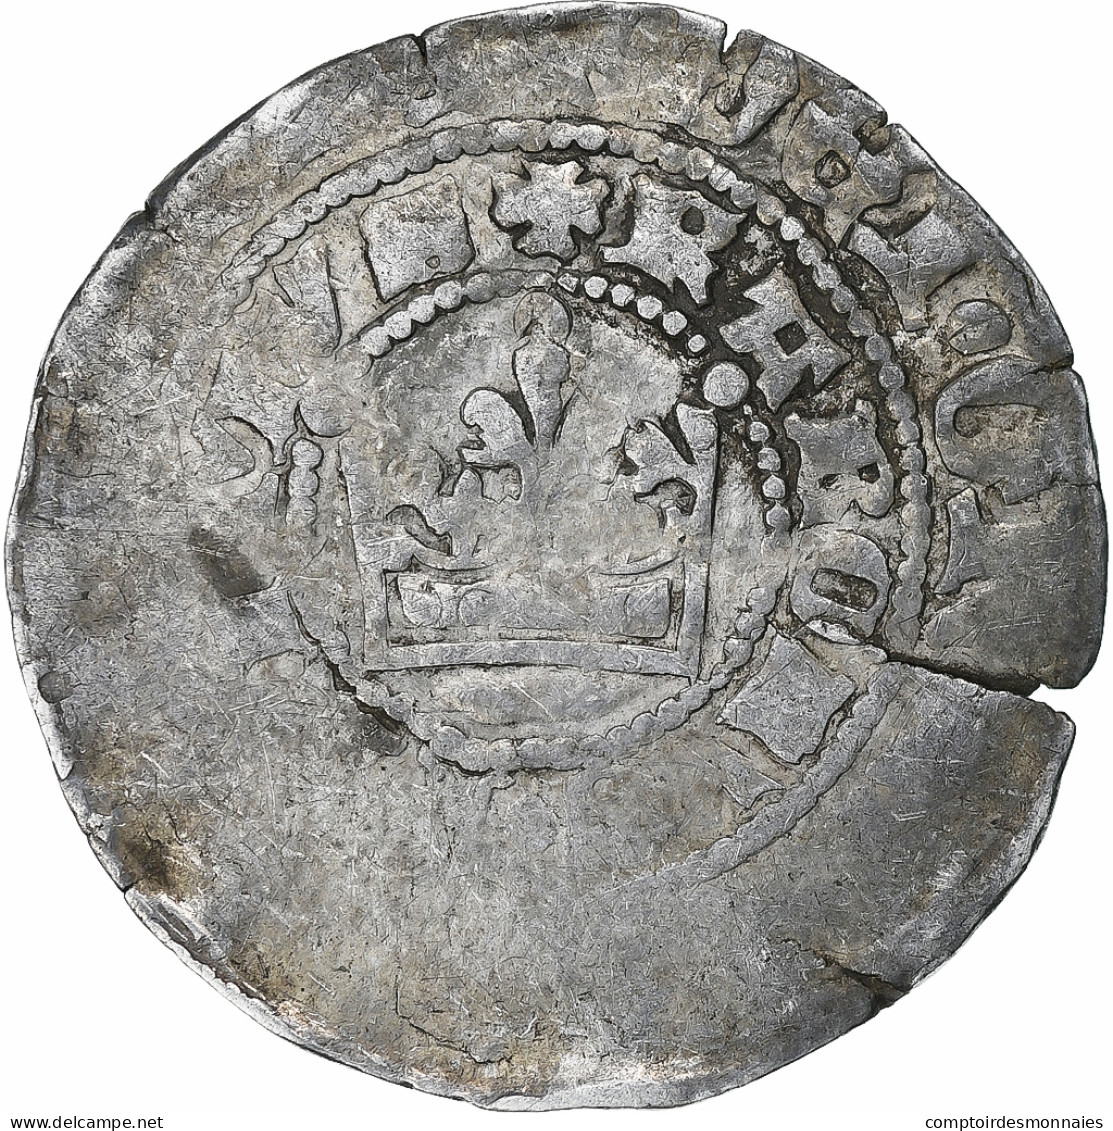 Royaume De Bohême, Karl IV, Gros De Prague, 1346-1378, Prague, Argent, TB+ - Czech Republic